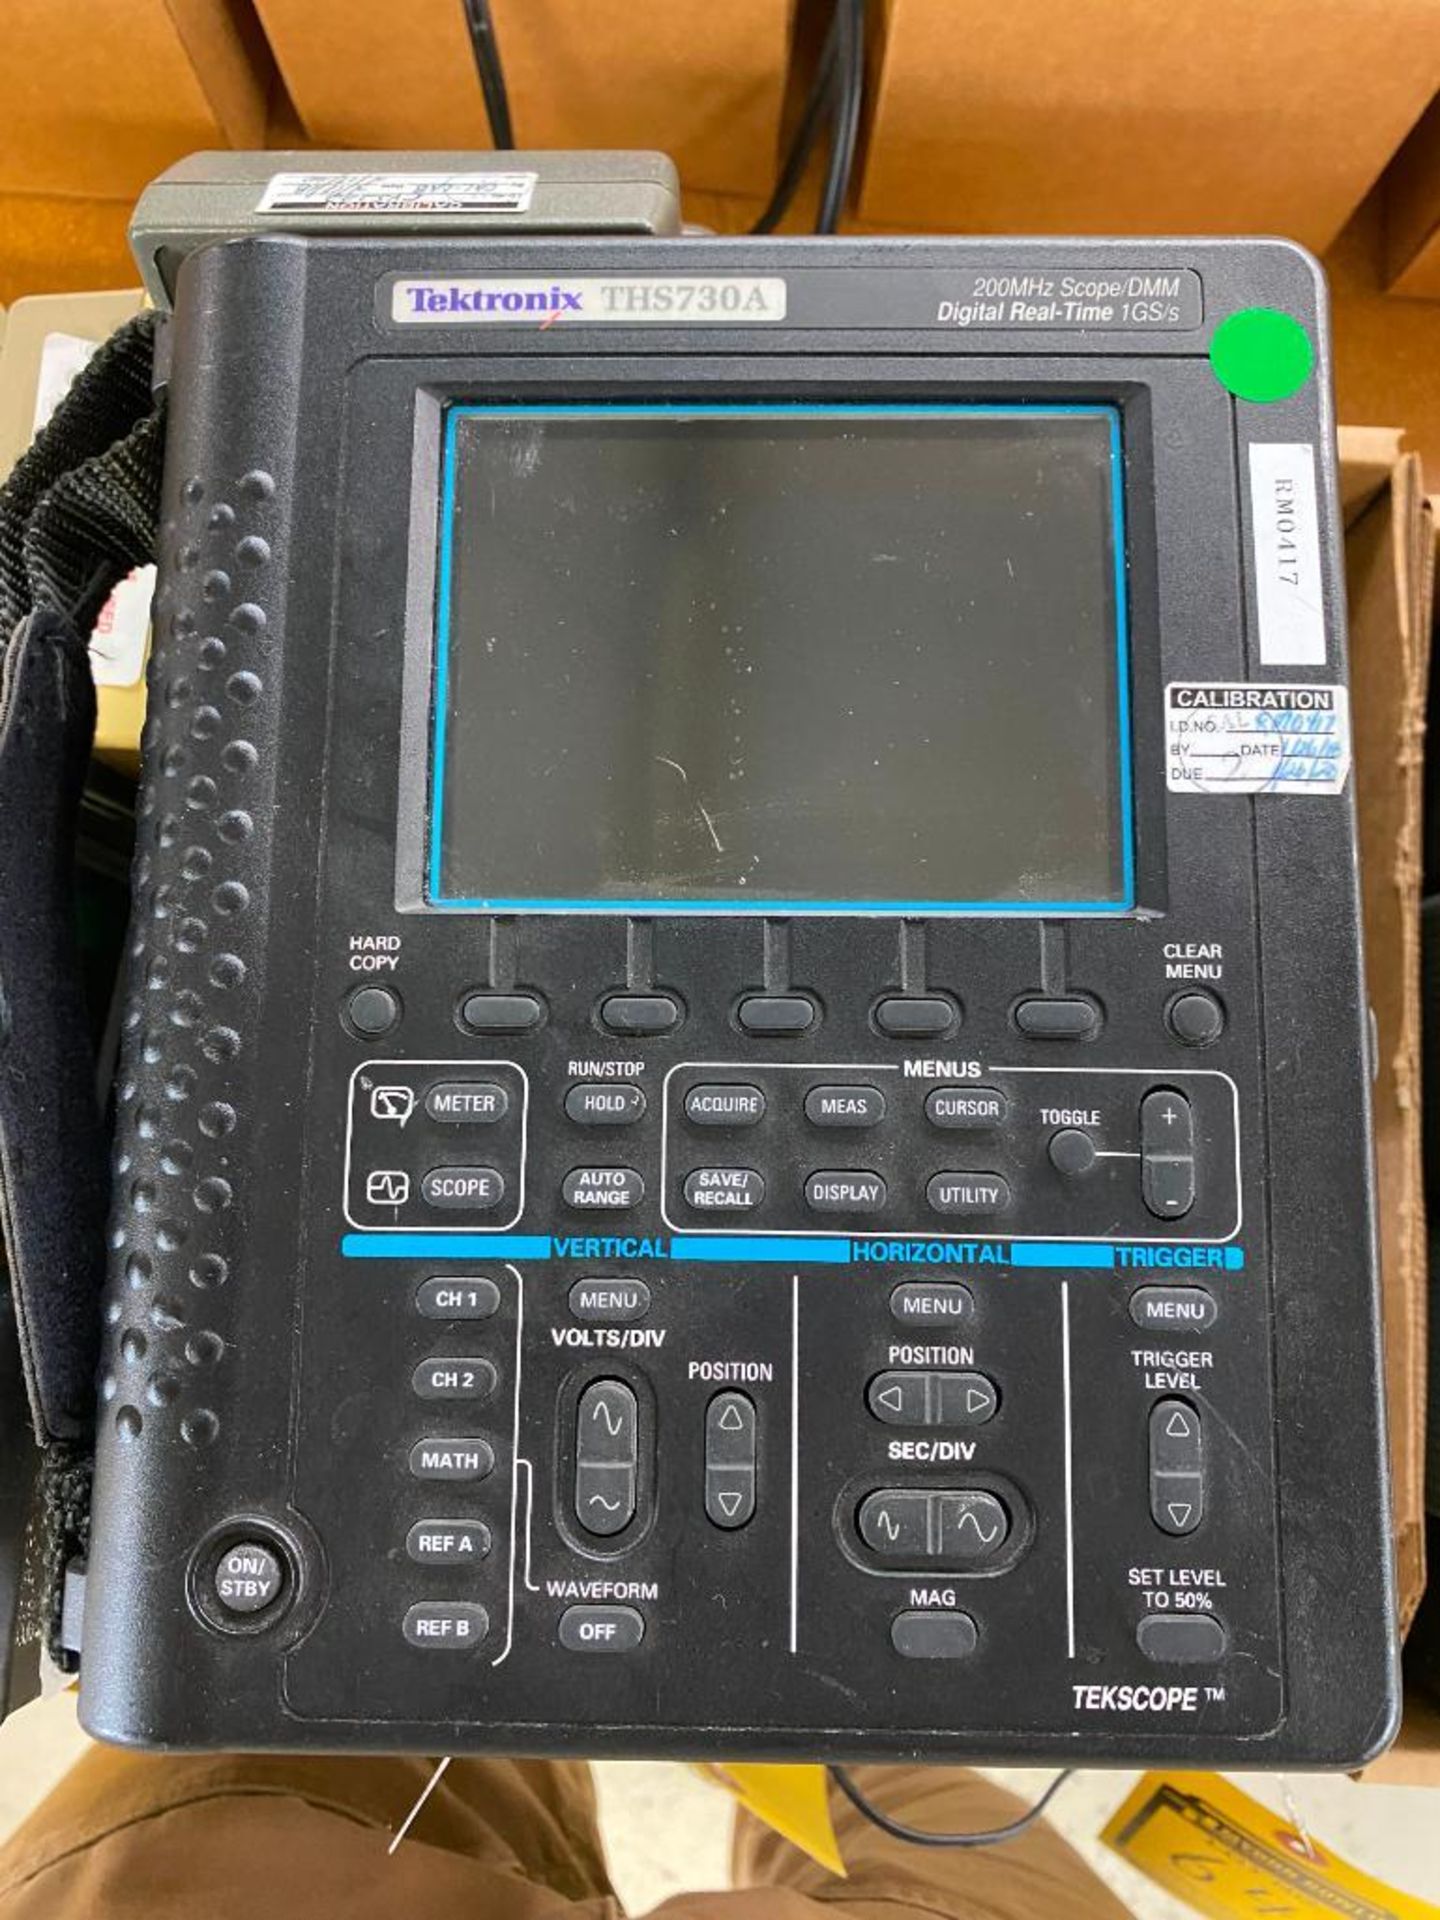 (2) Tektronix THS730A Digital Oscilloscope